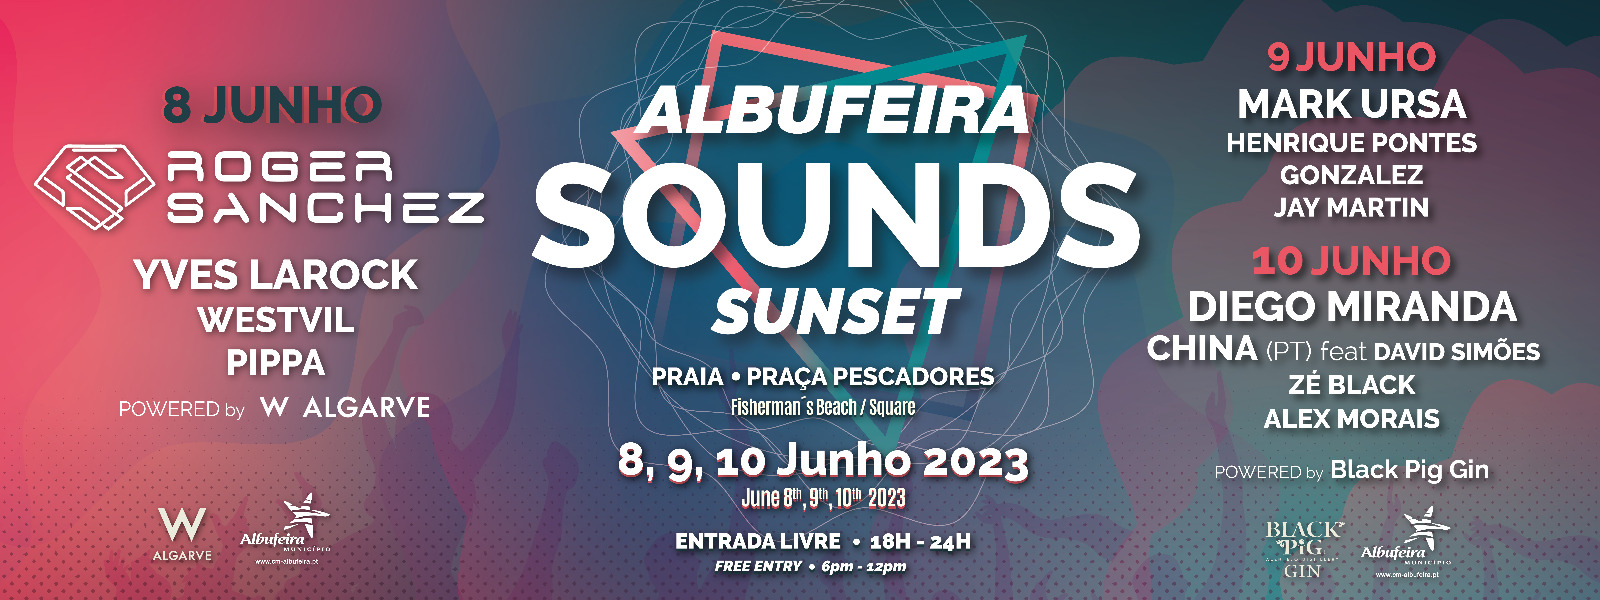 Albufeira Sounds Sunset